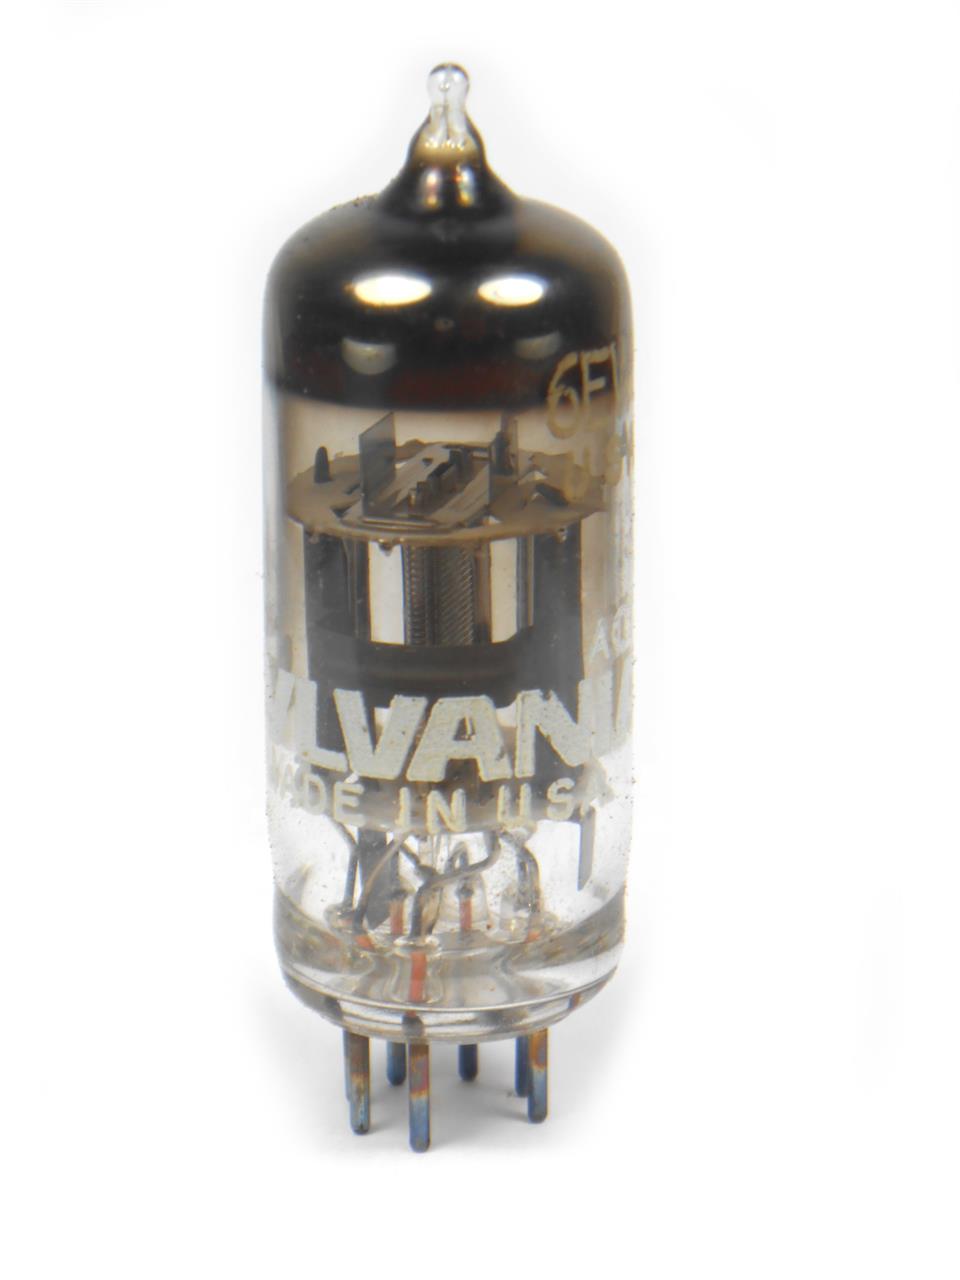 Válvulas eletrônicas pentodo amplificadoras com base subminiatura de sete pinos - Válvula 6EW6 Sylvania